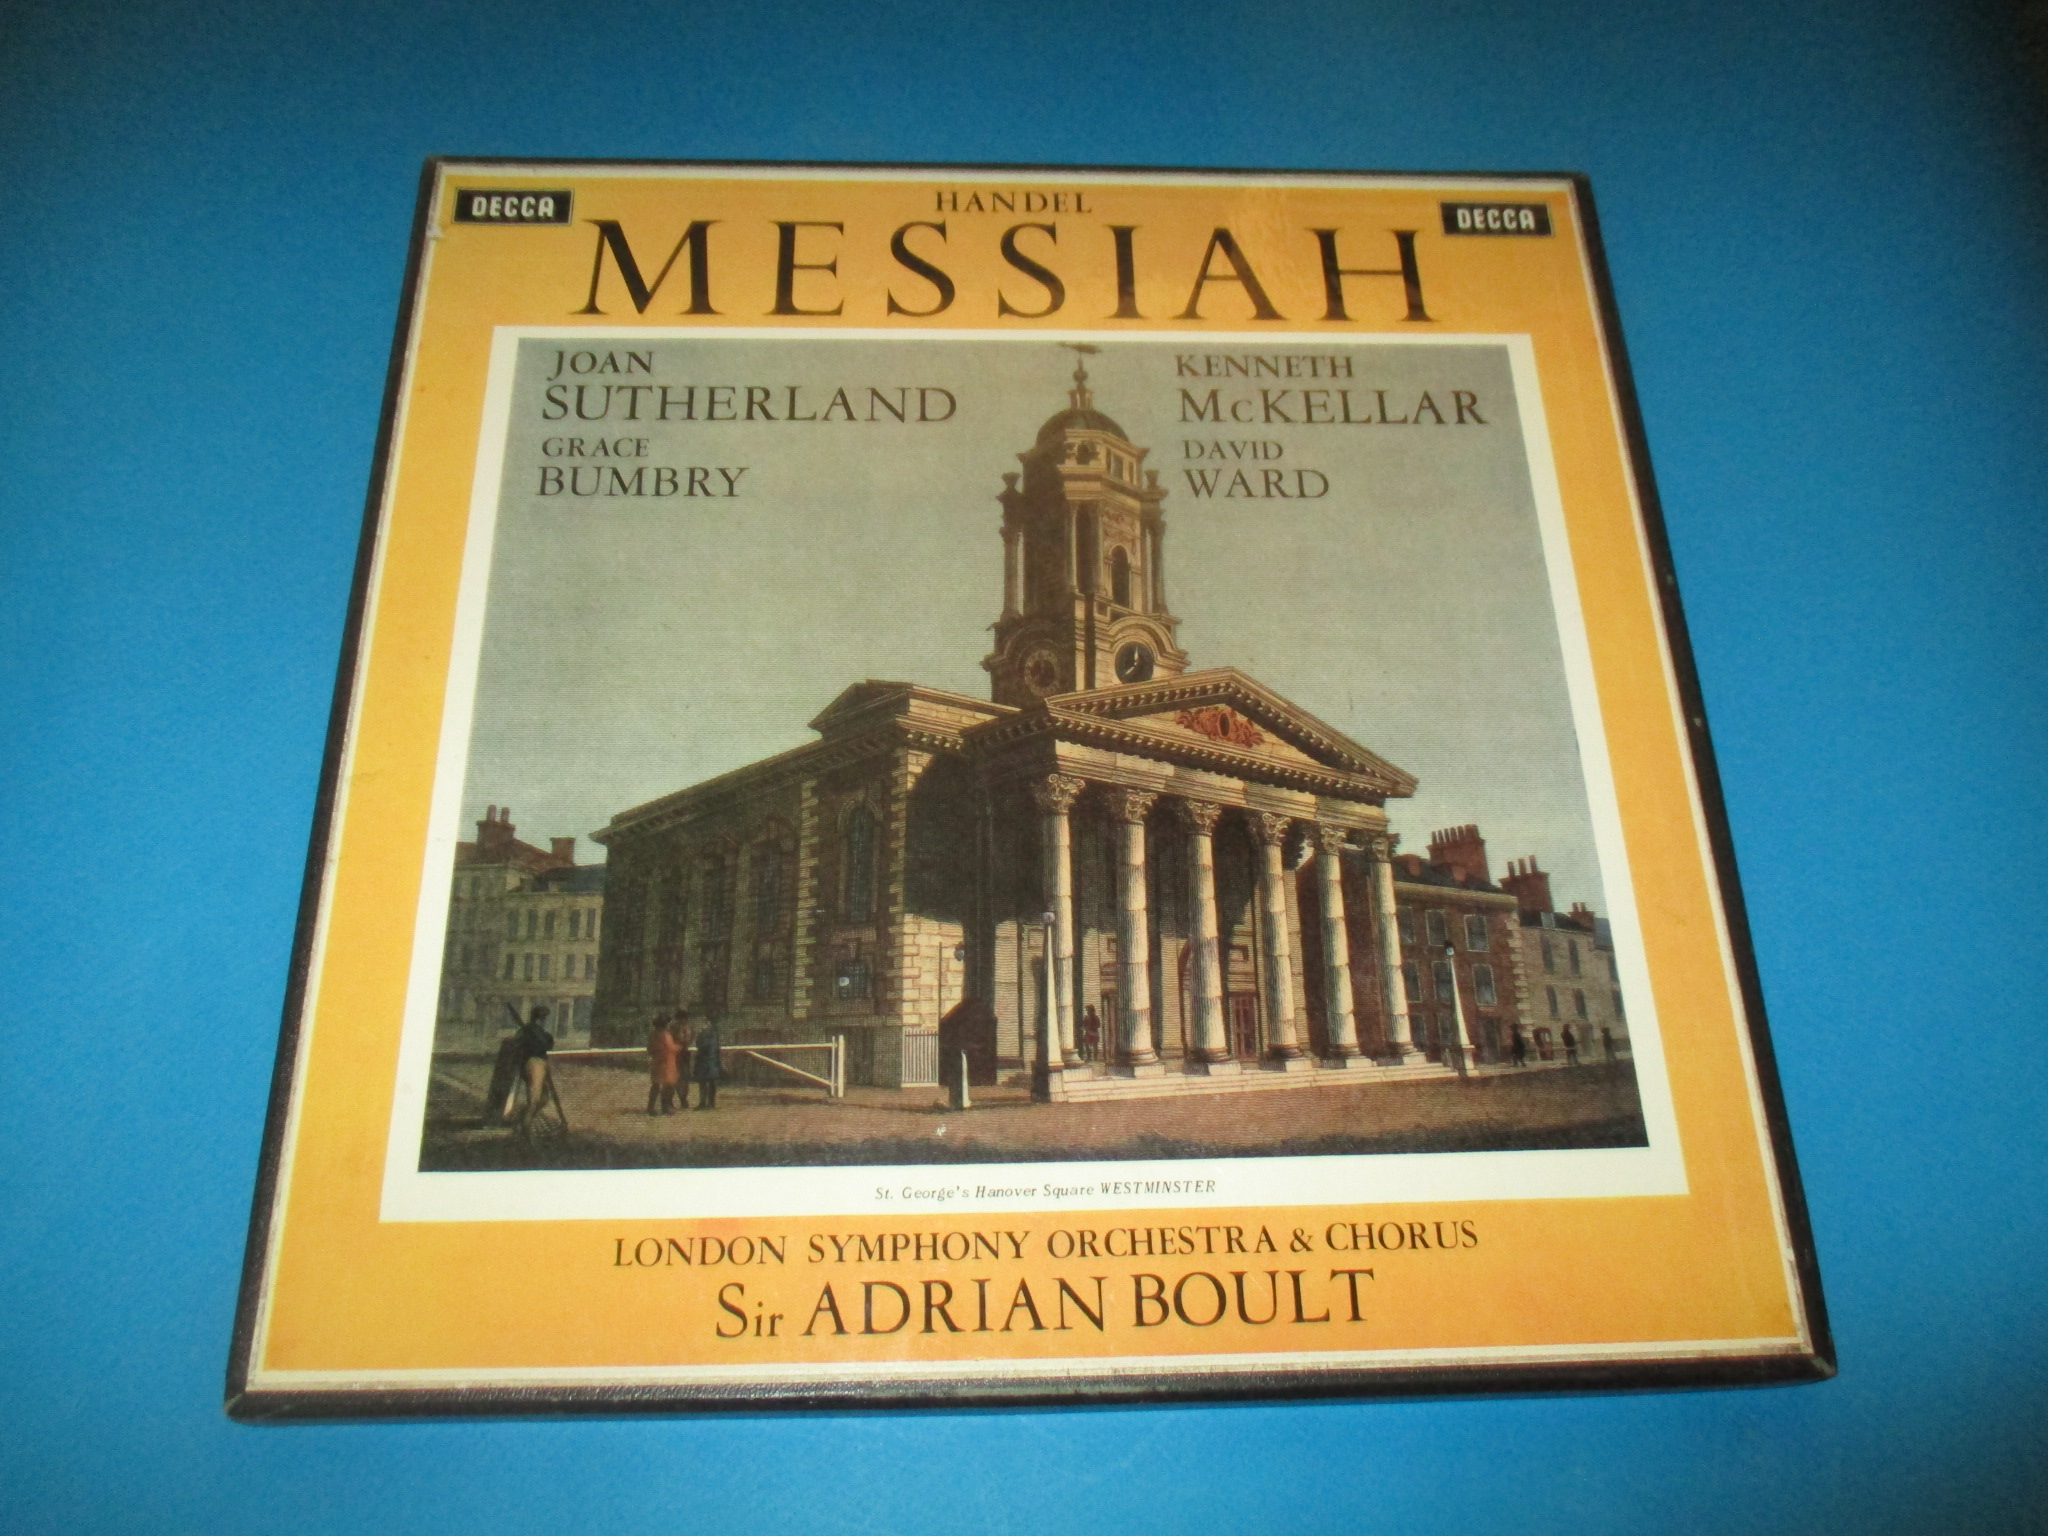 Coffret 3 disques Messiah, Handel, Joan Sutherland Grace Bumbry, Kenneth McKellar, London Symphoniy Orchestra & Chorus Sir Adrian Boult, Decca